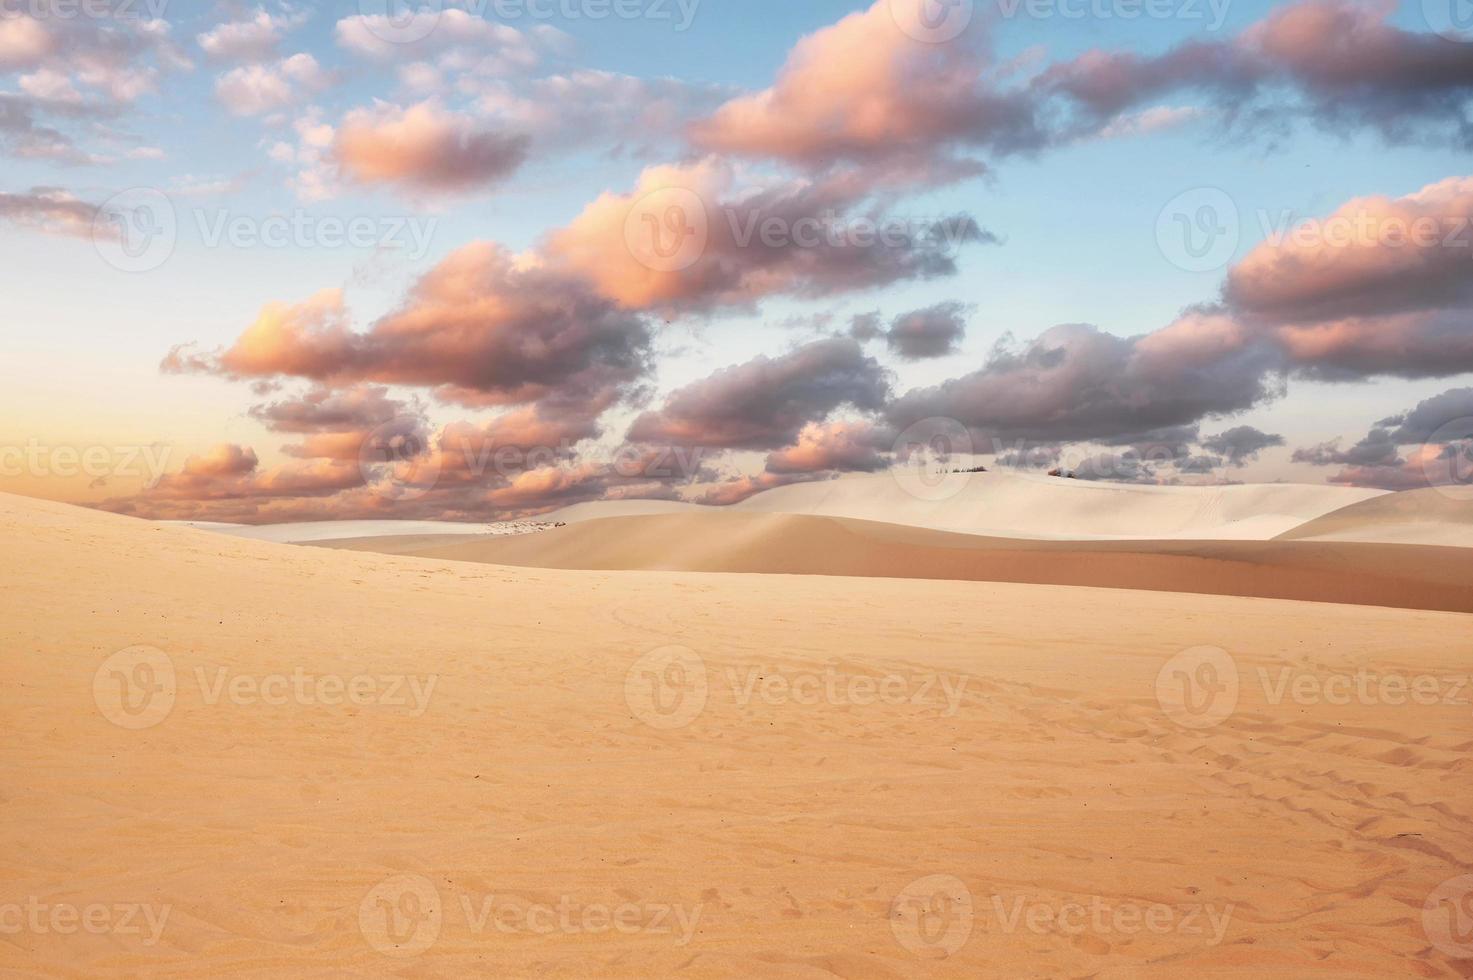 zandduin met kleurrijke wolk in de lucht op woestijn foto